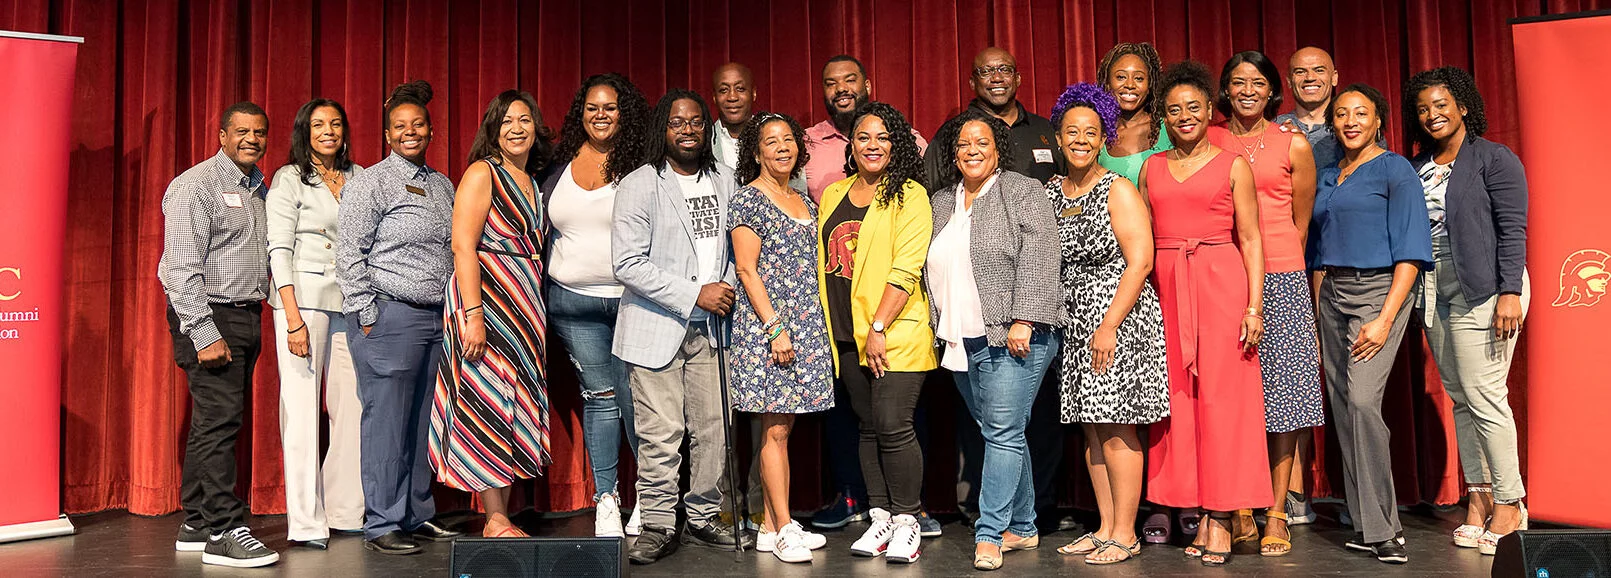 Black Alumni Council group photo